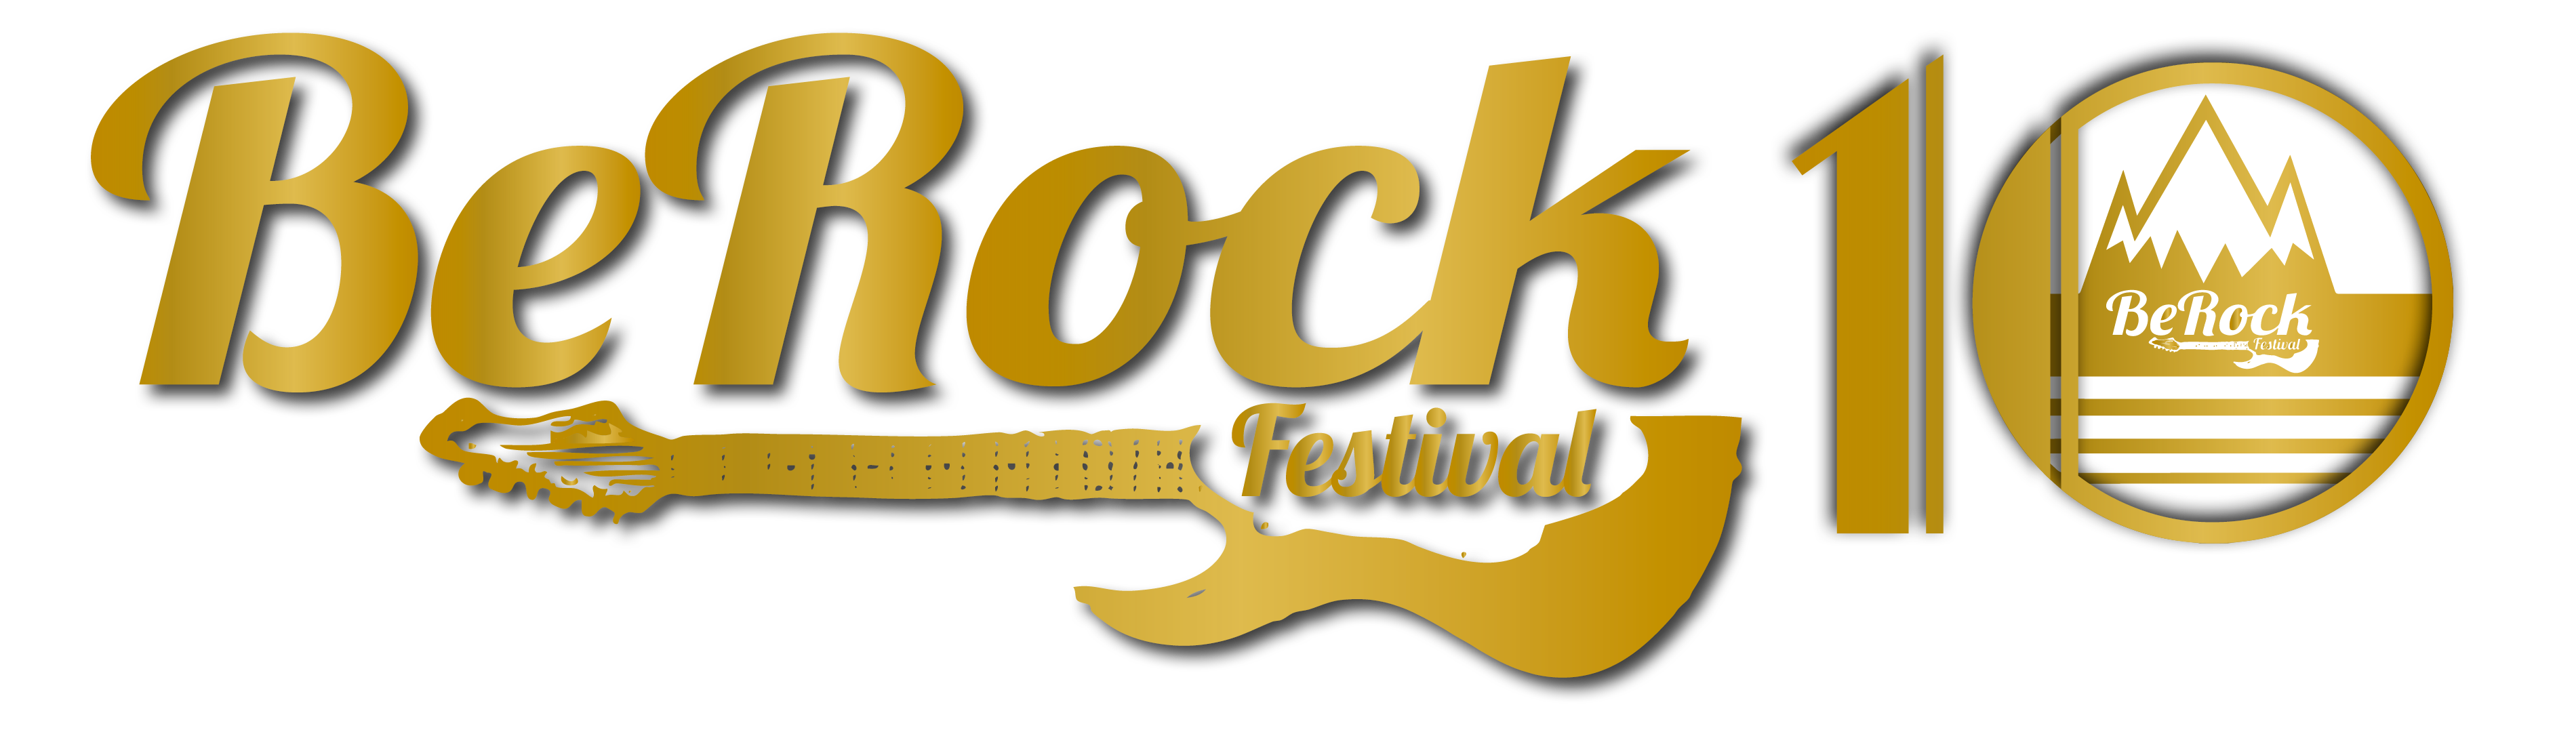 BeRock Festival